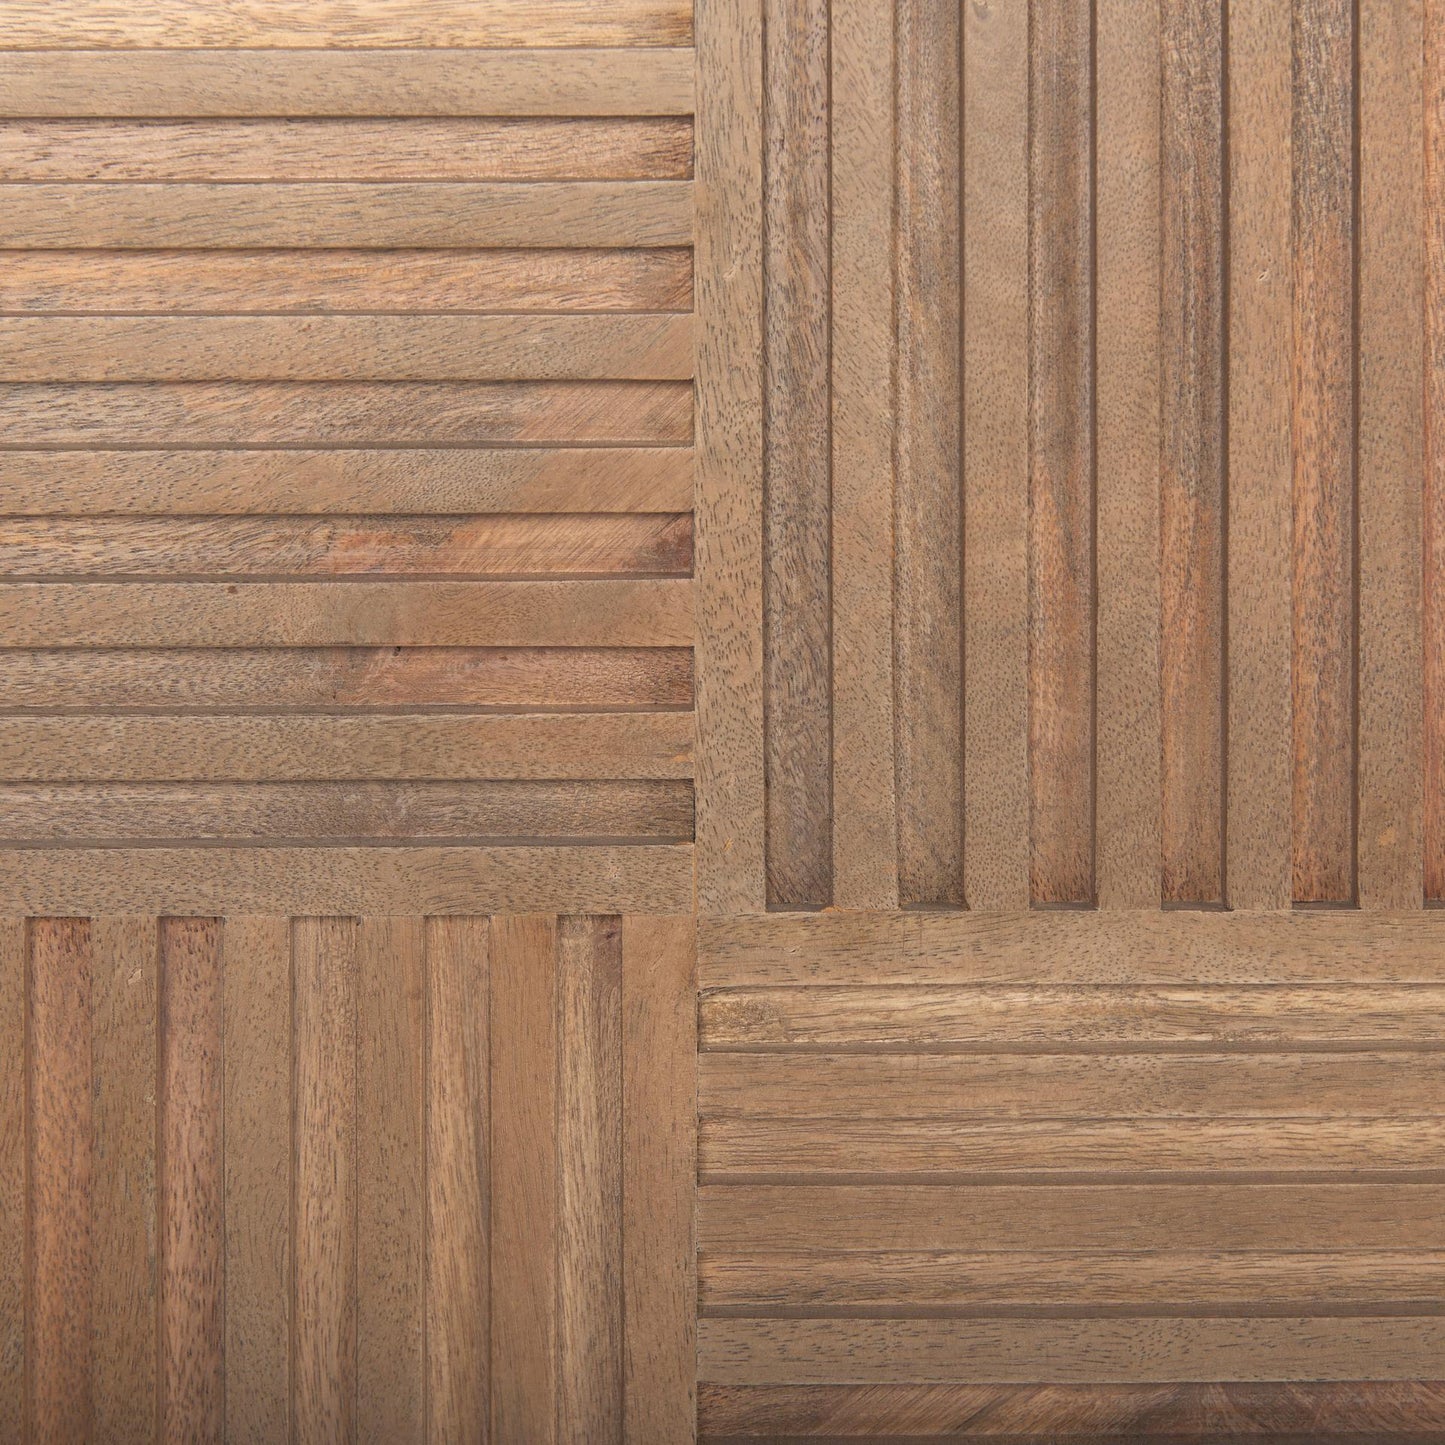 Sable 73.L x 17W x 30.5H Light Brown Solid Wood 4 Door Sideboard